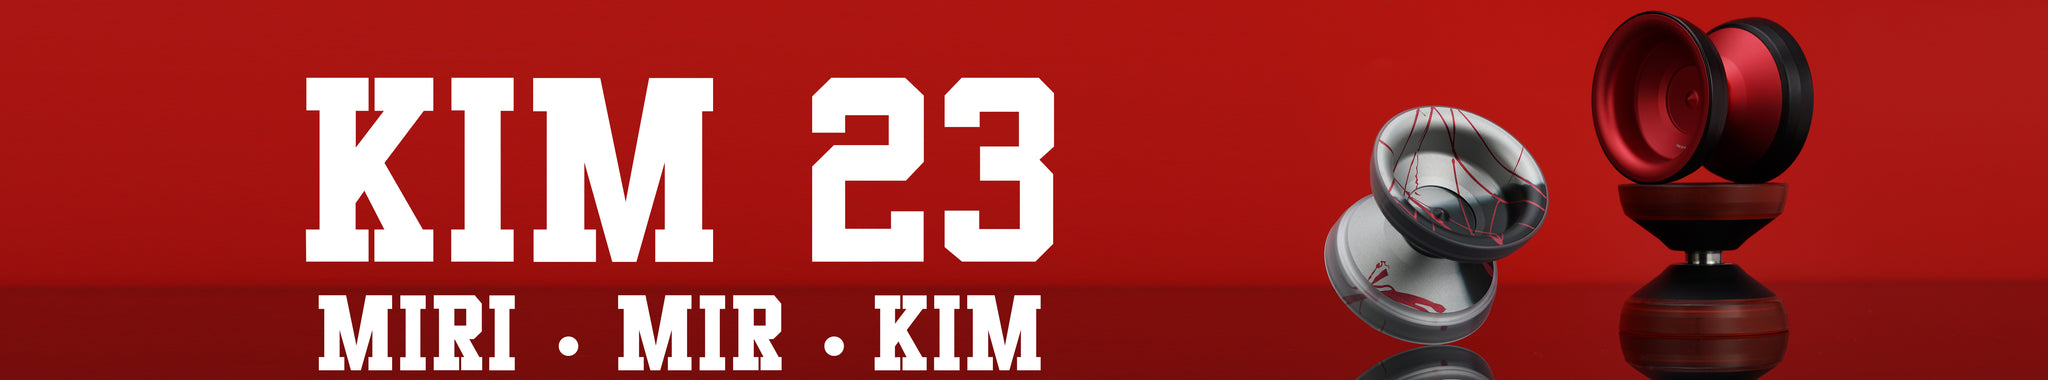 KIM 23 by YoYoFactory and Mir & Miri Kim